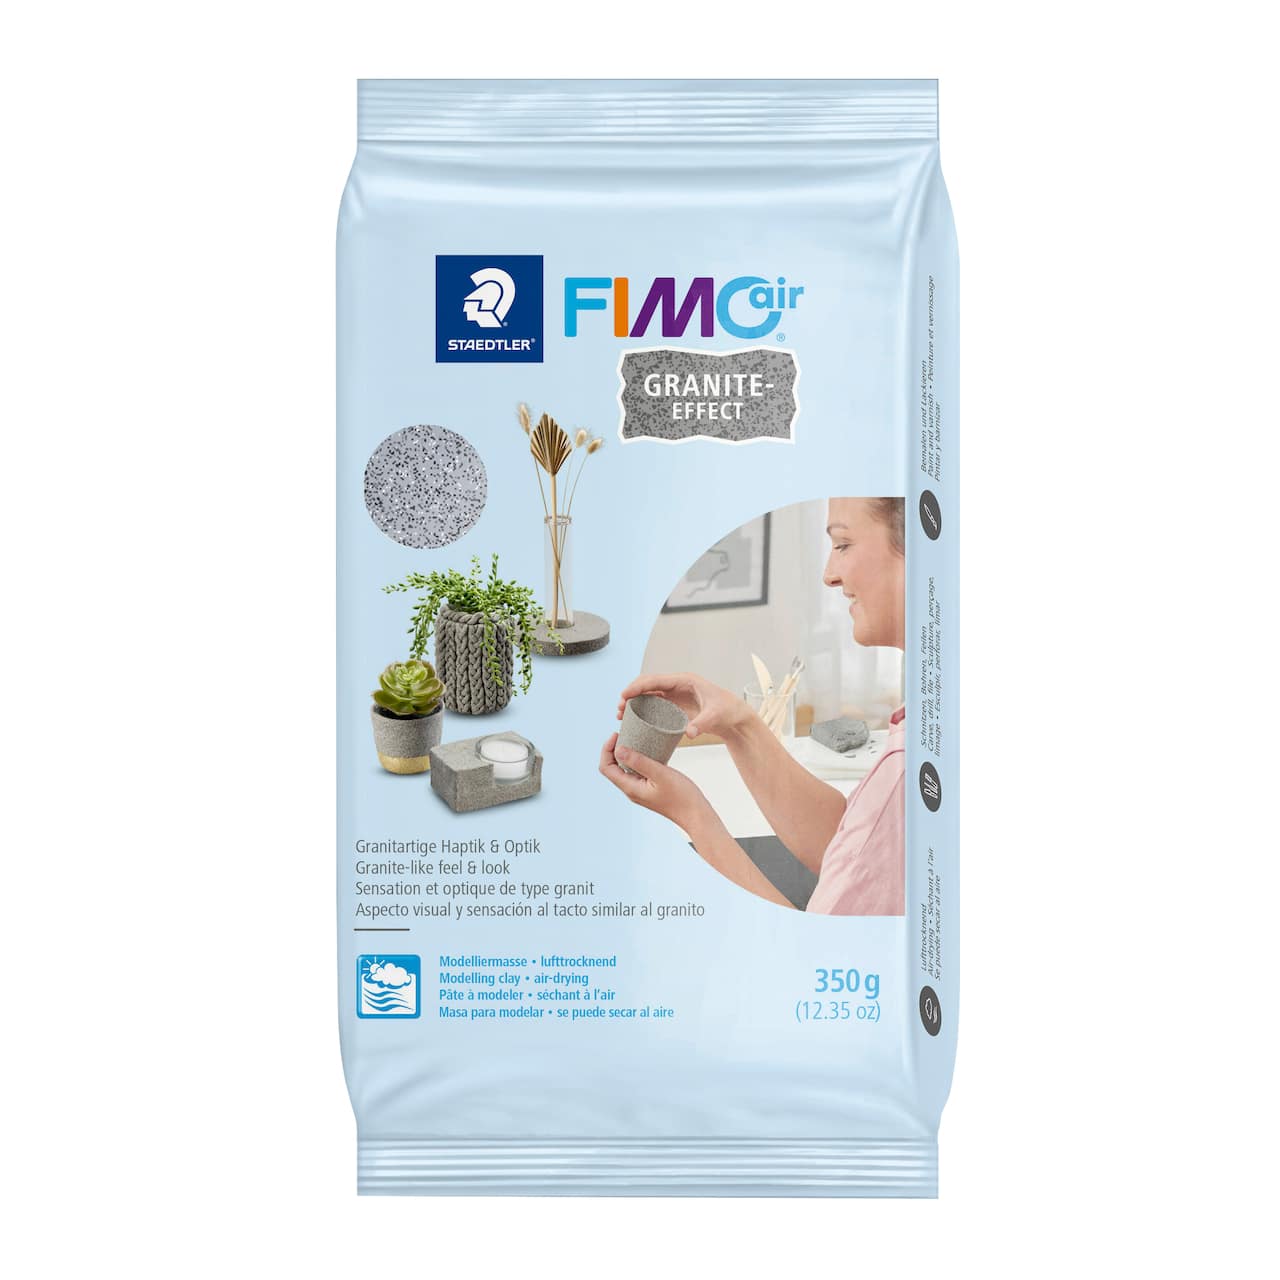 FIMO® Air 12.3oz. Granite-Effect Air-Dry Modeling Clay